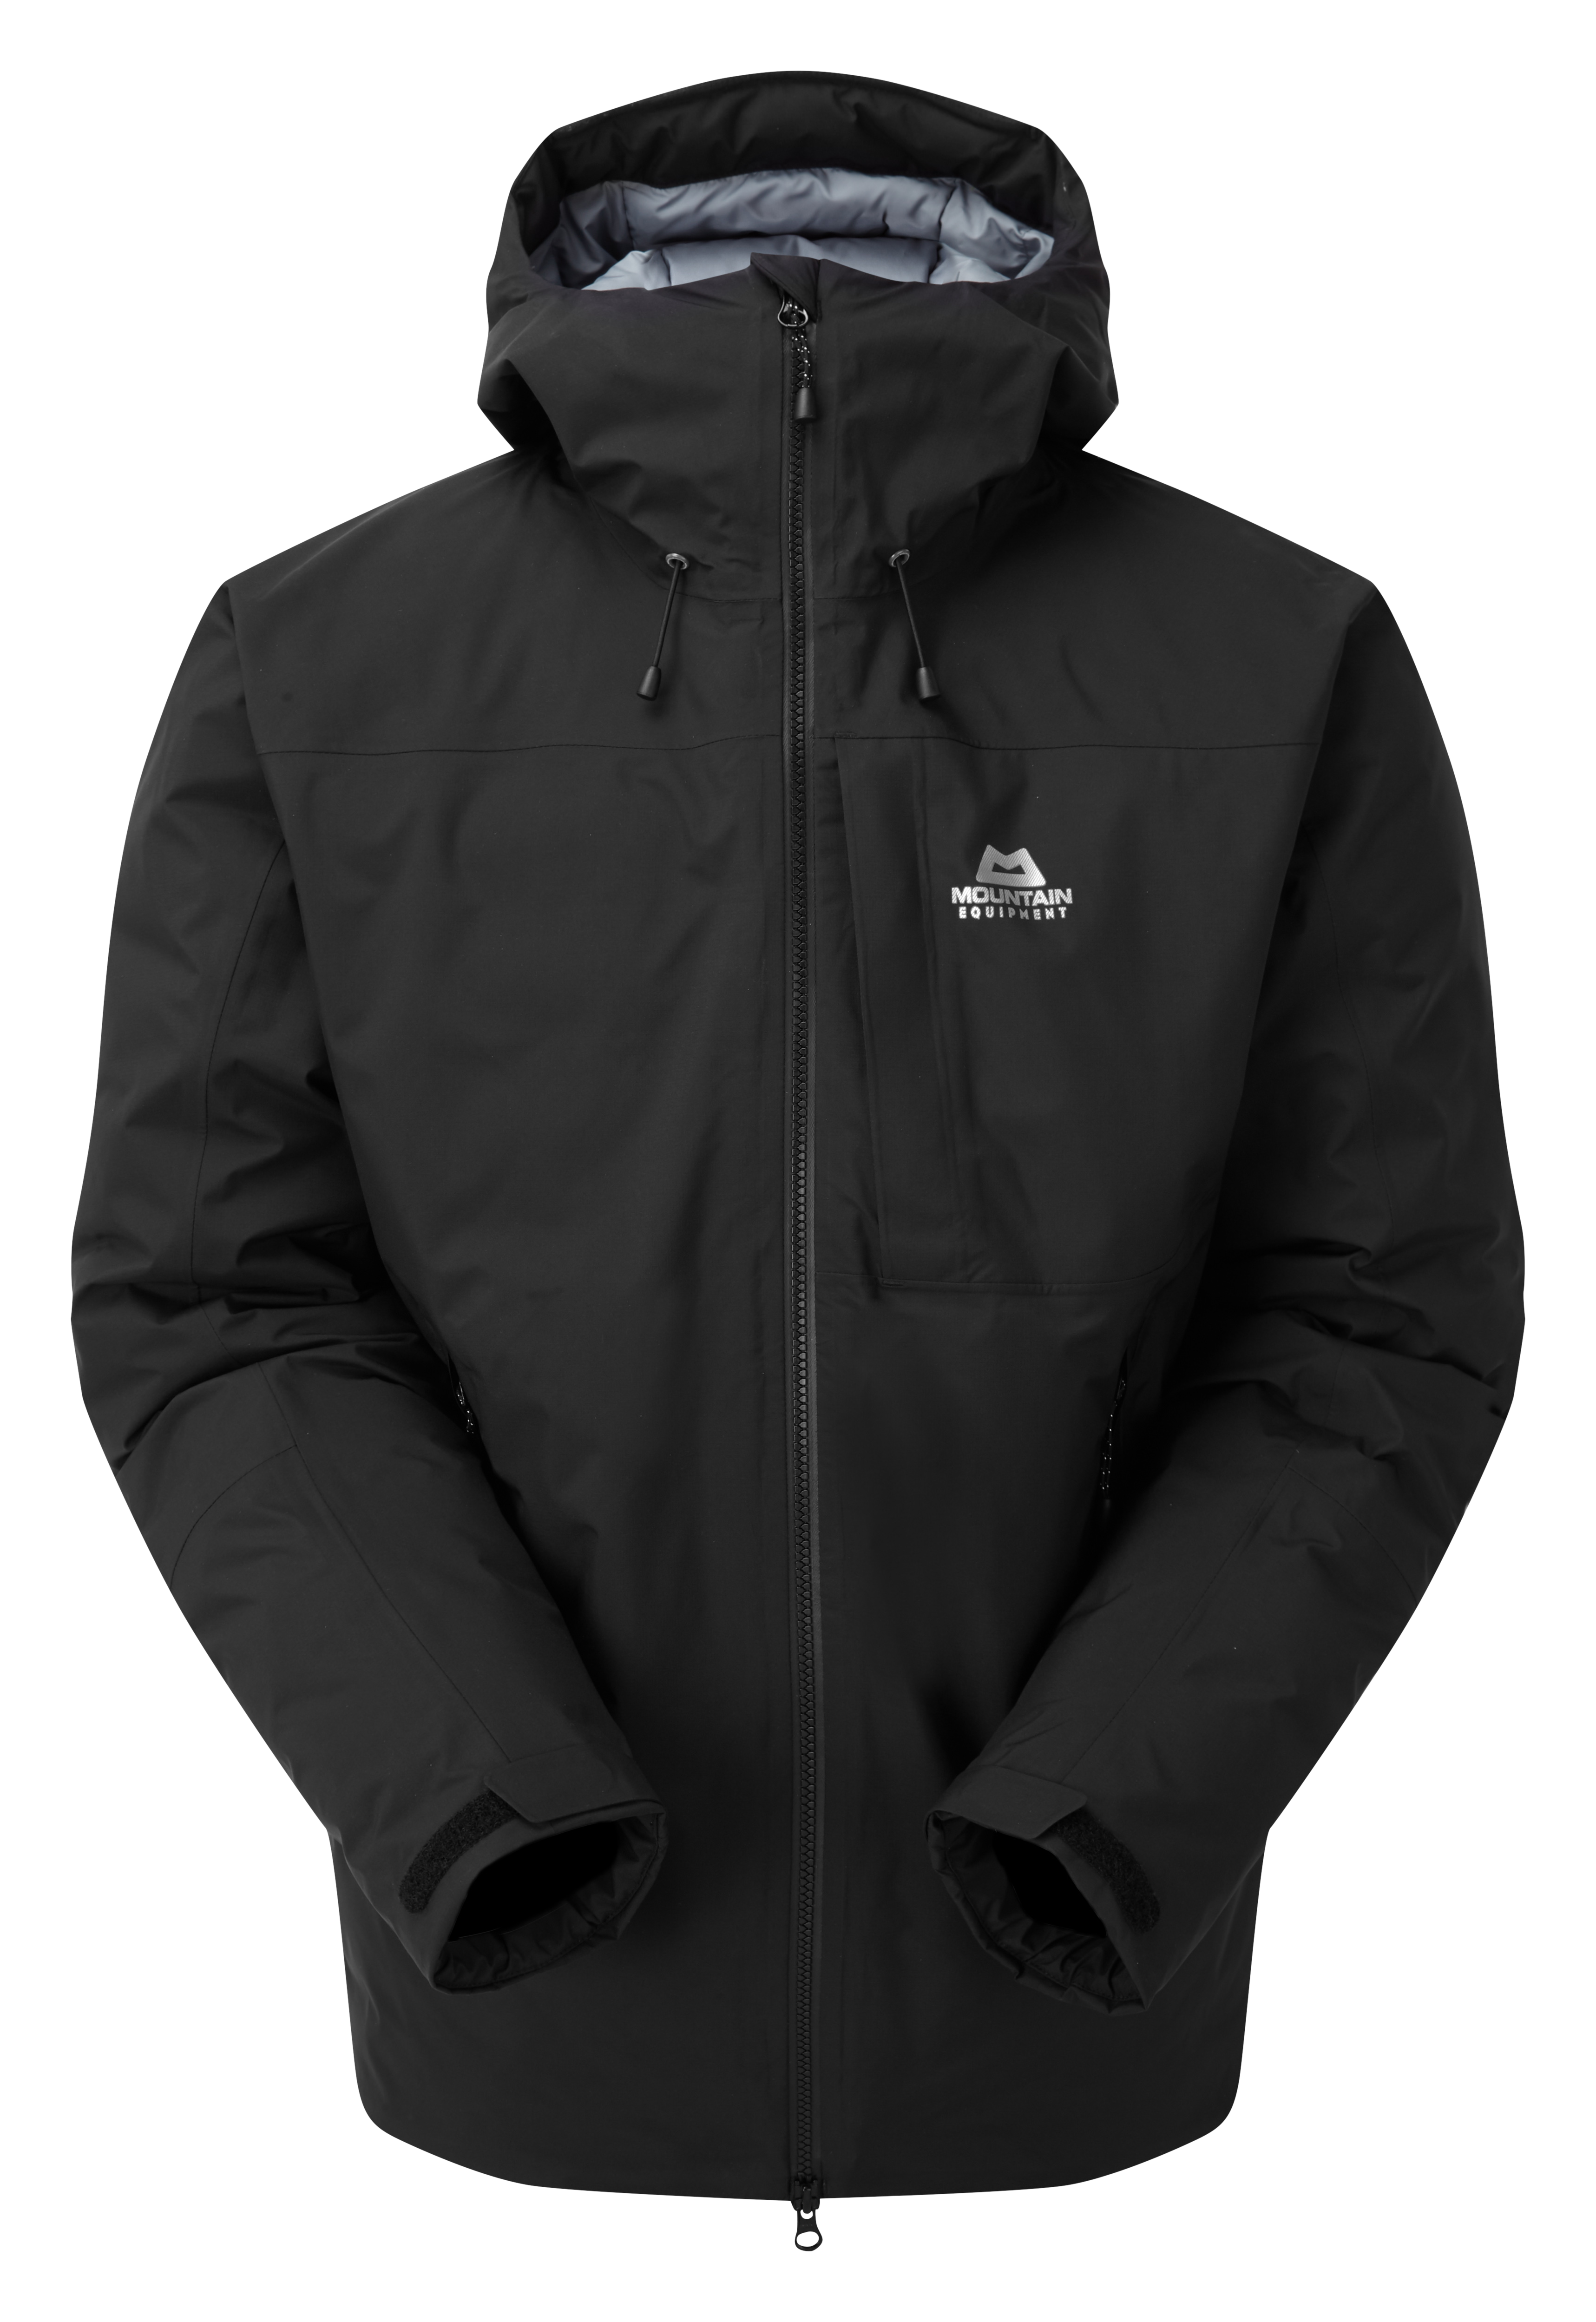 Mountain Equipment Triton Jacket - Hardshell jacket - Men's